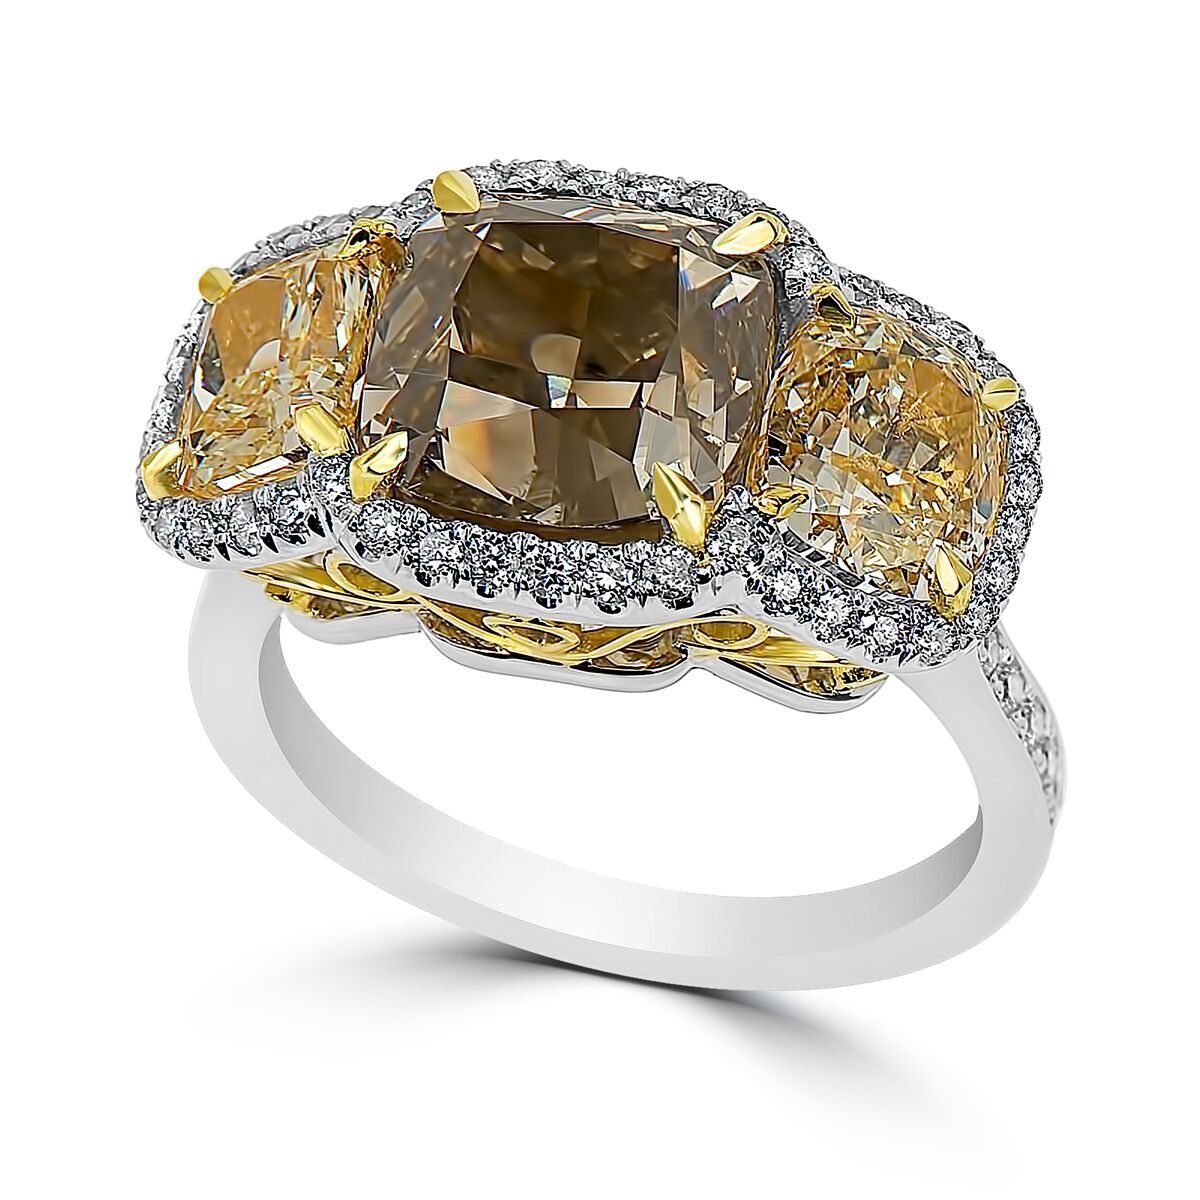 Lady’s 5.04ct Fancy Grayish Orangy Yellow Diamond Ring (8.21ct TW)